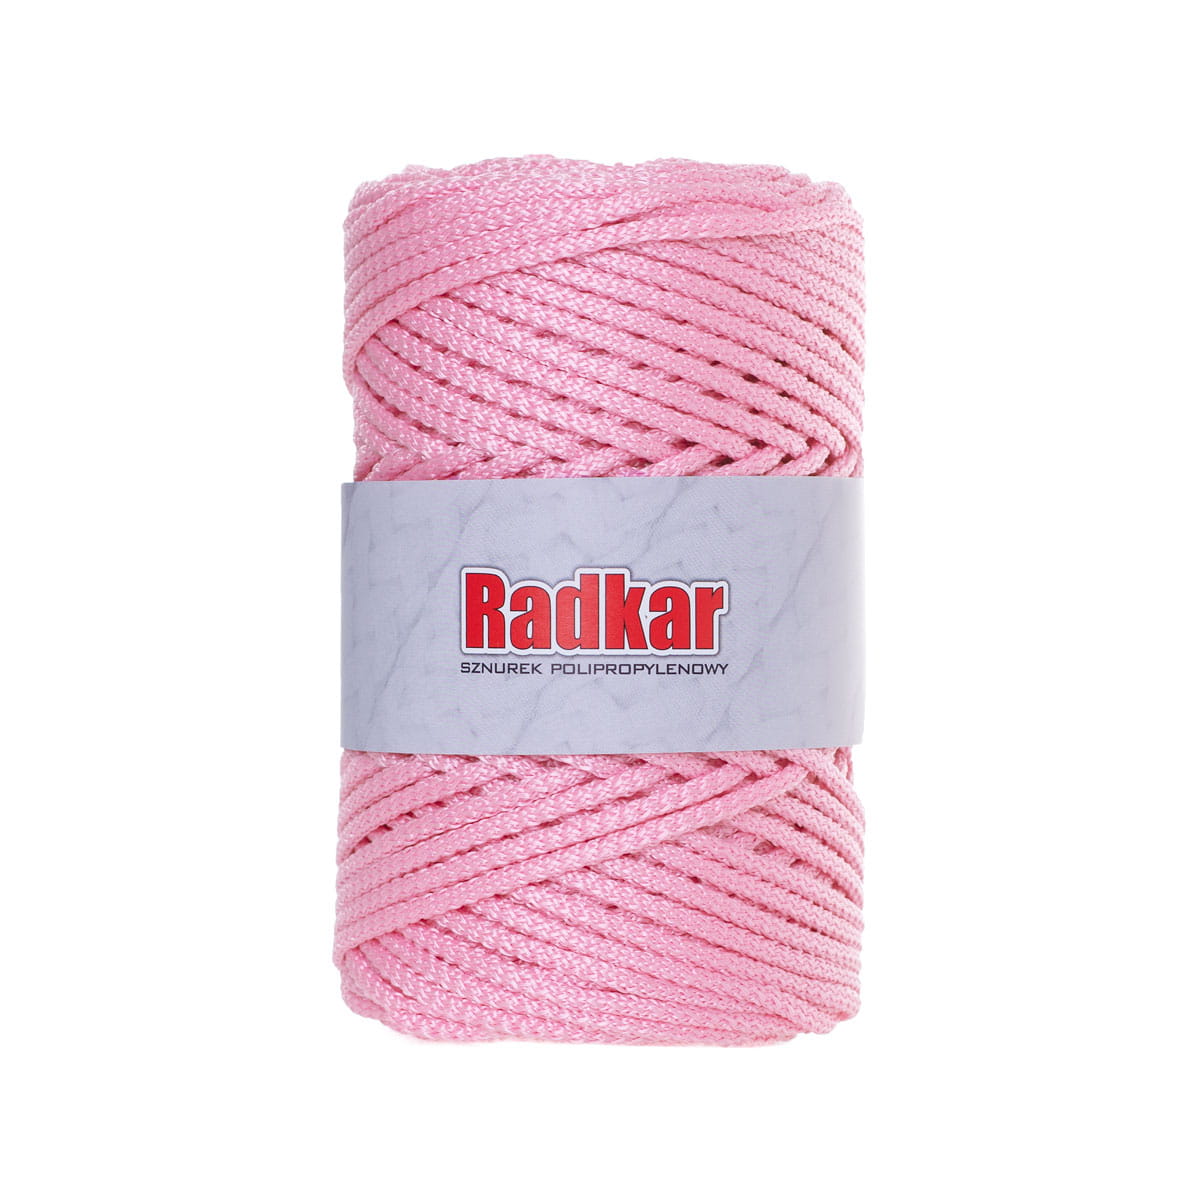 5mm polypropylene cord braided handmade water resistant radkar craft